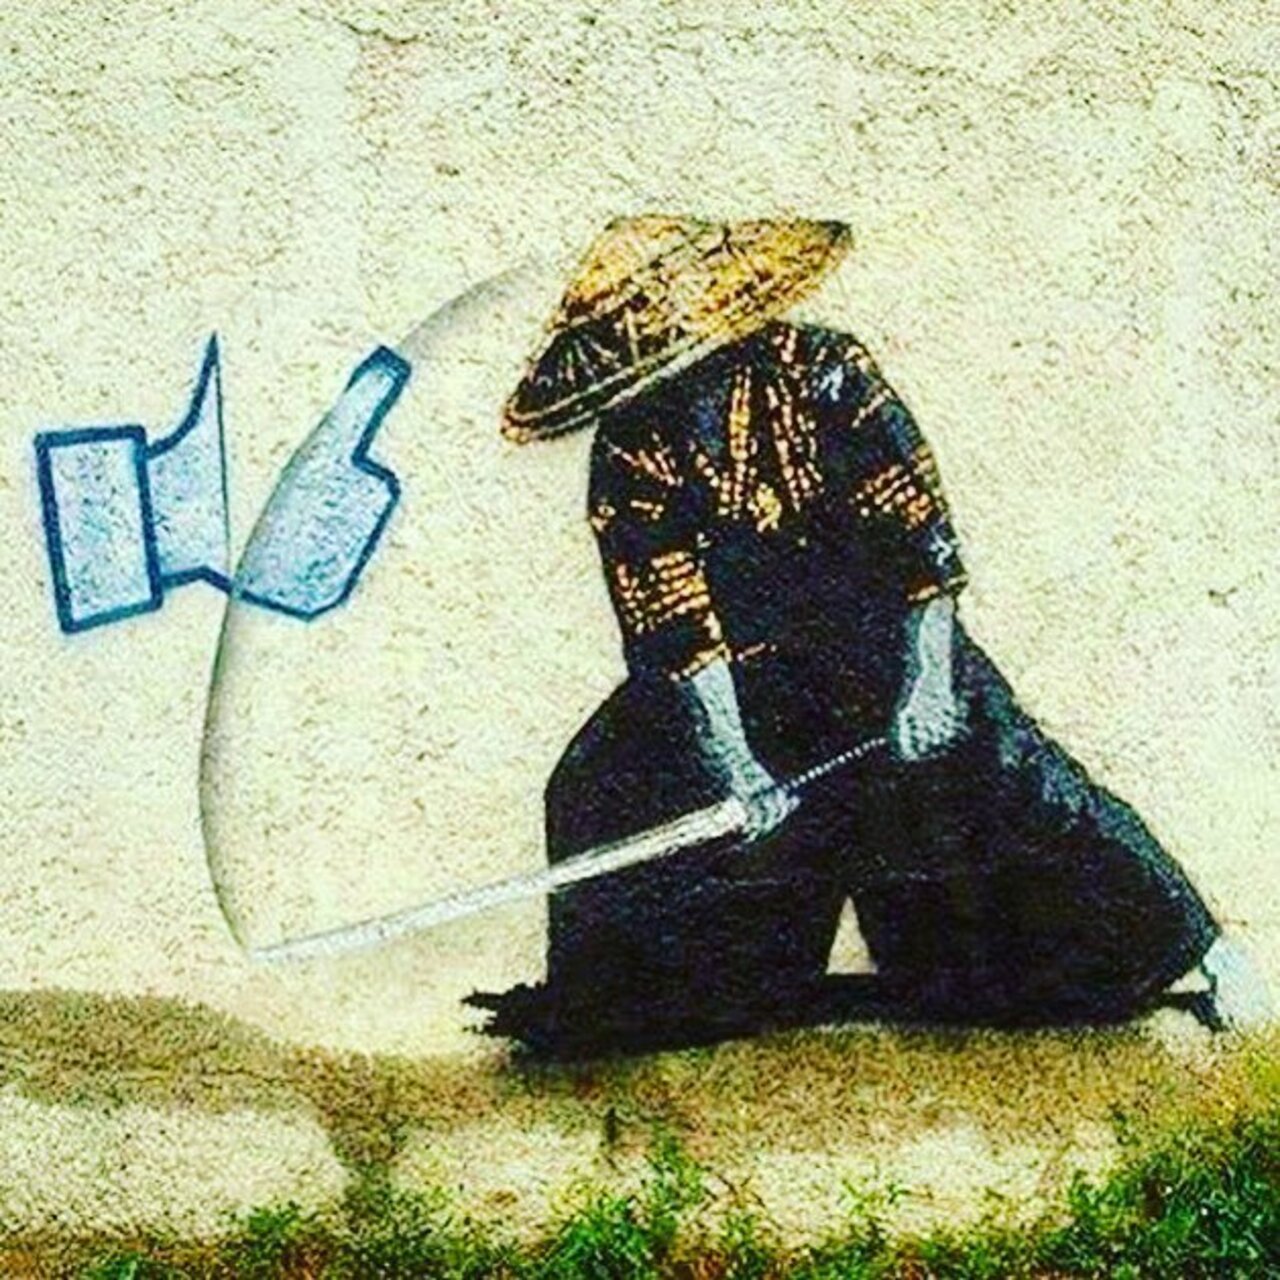 RT @StArtEverywhere: Likes created by @artnafir #artnafir #streetart #art #MrHOLLYWOOD #graffiti #sprayart #Banksy #Artist #MrBrainwas… https://t.co/u6cZLYyuFW